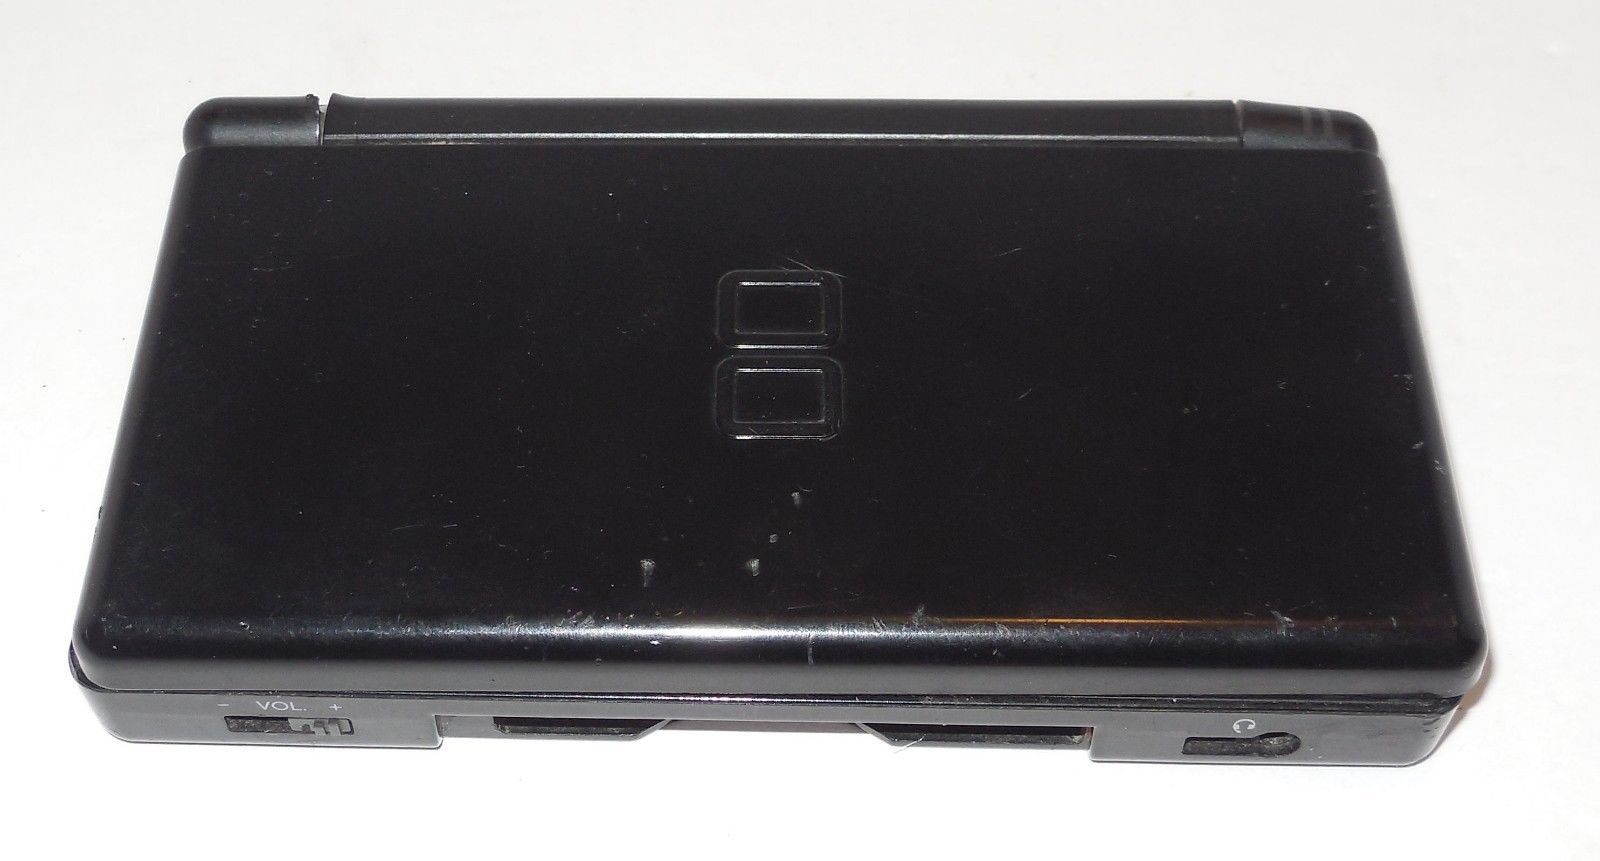 Nintendo DSi Launch Edition Black Handheld System